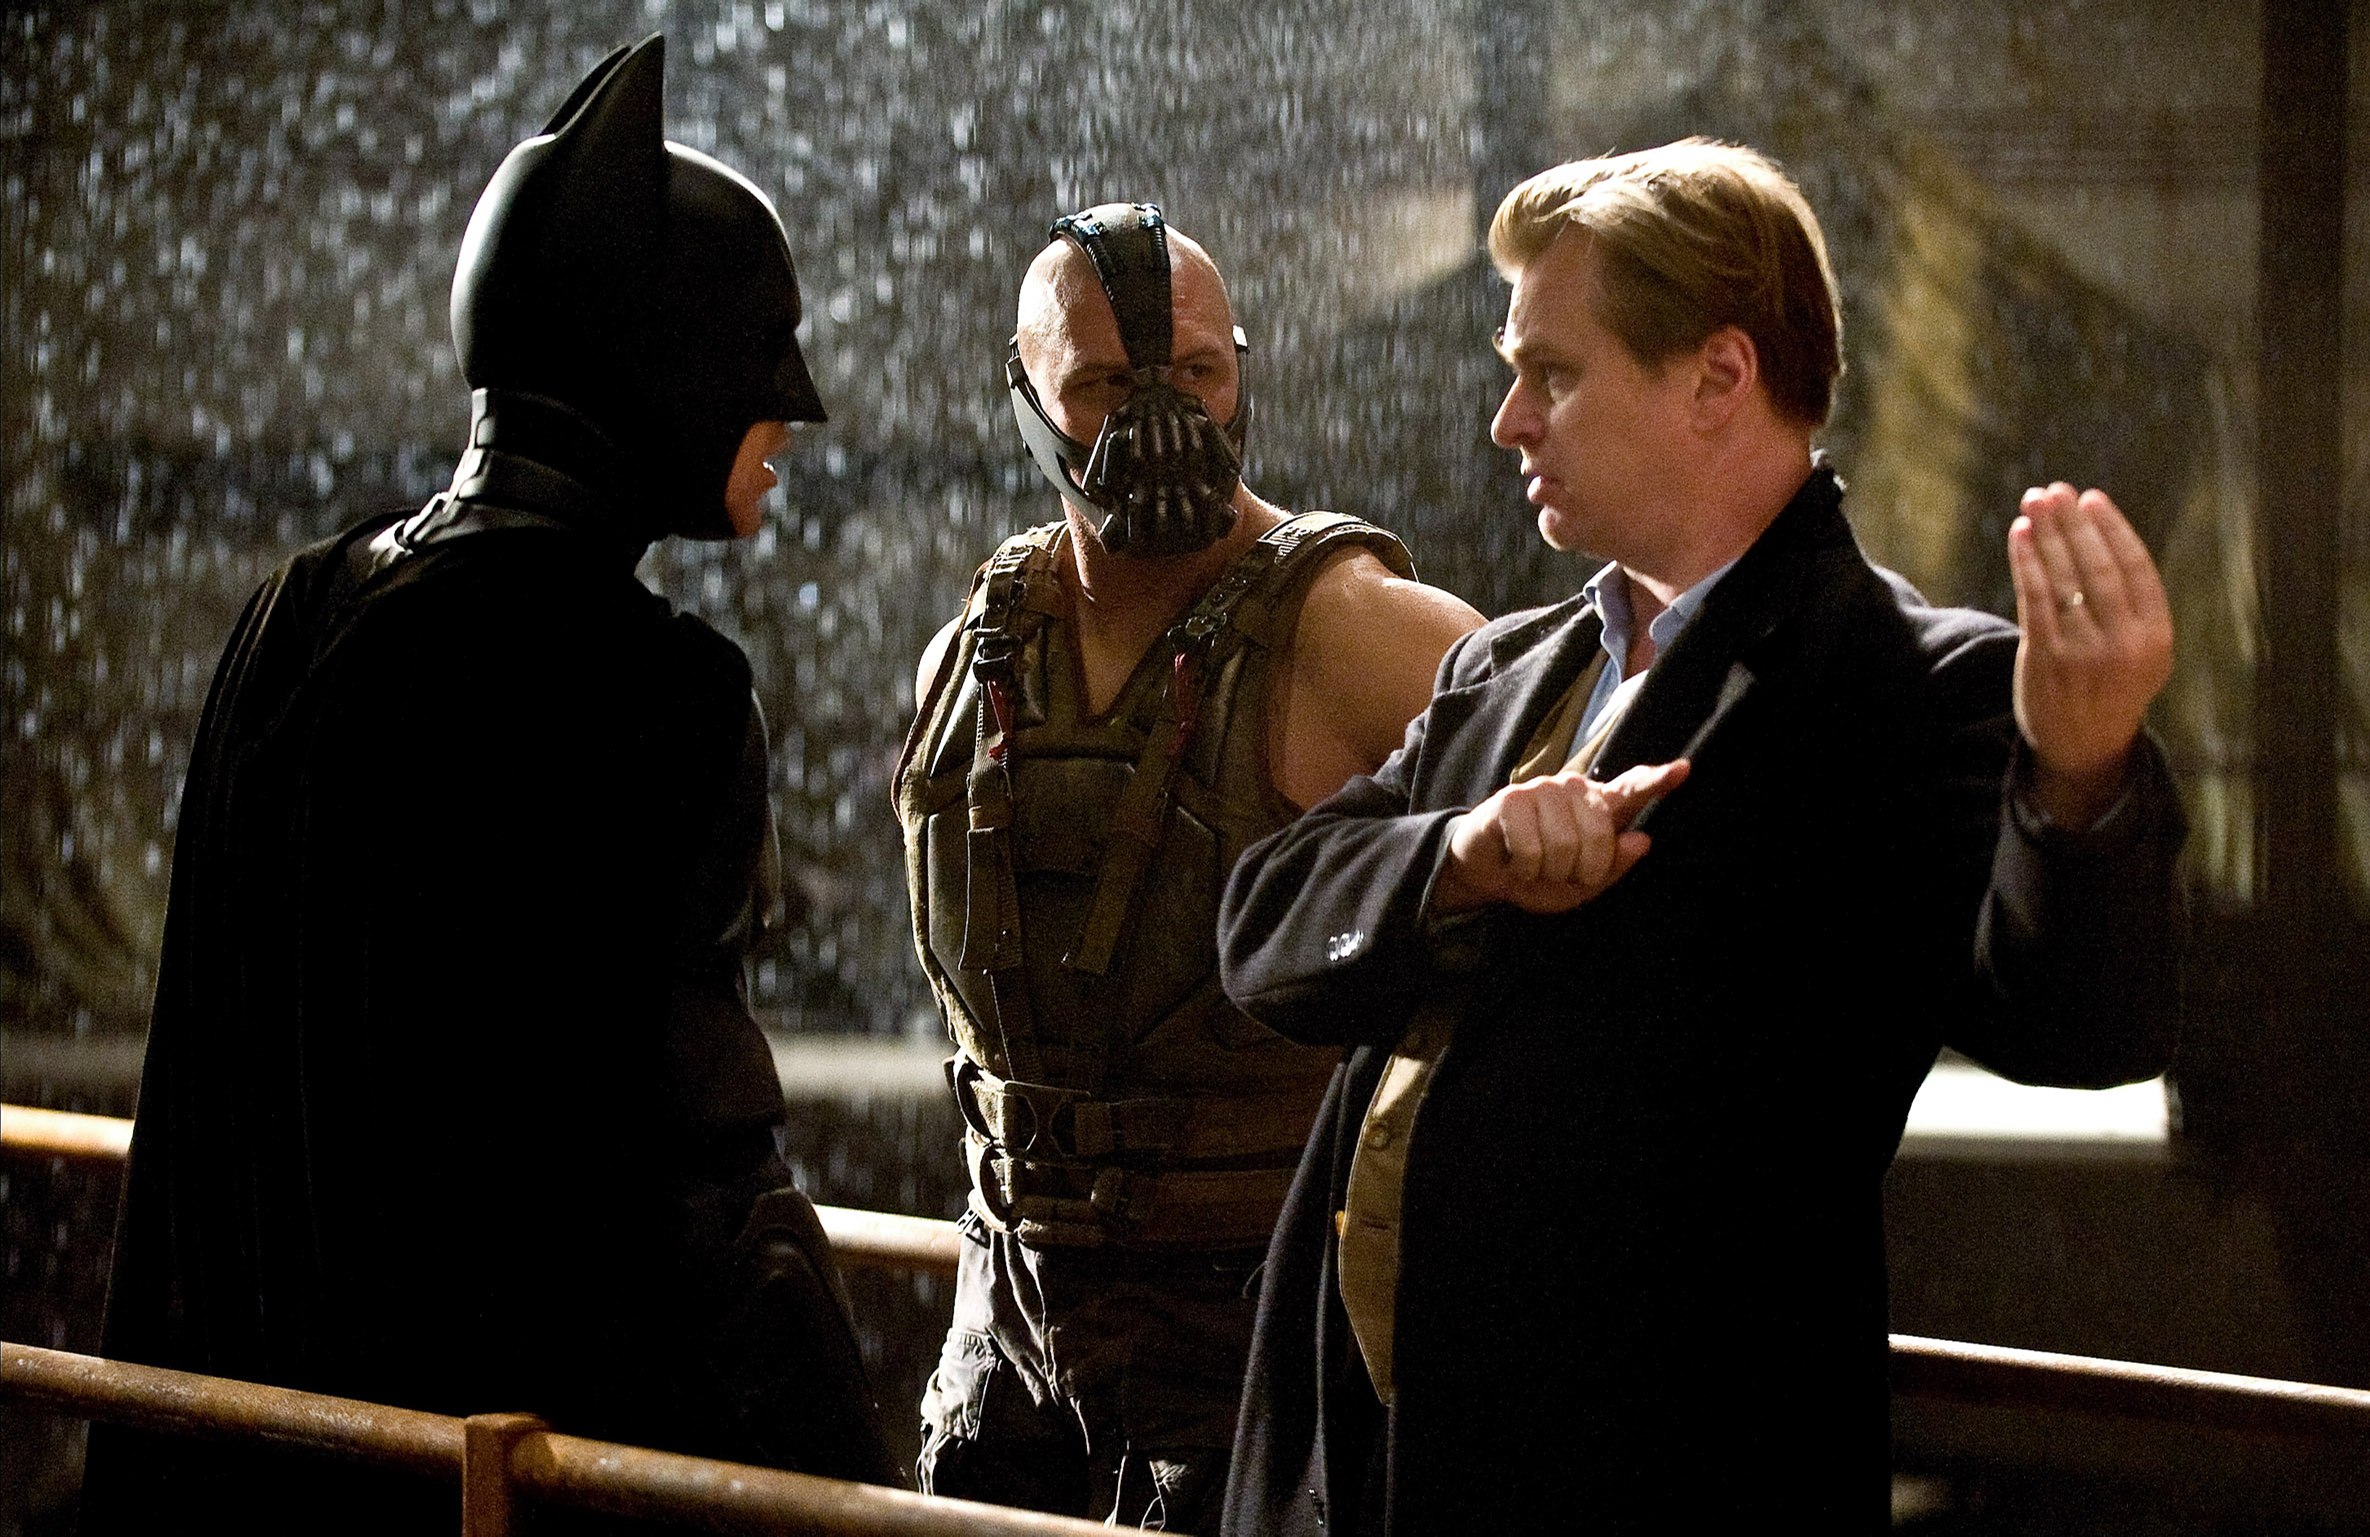 Christopher Nolan made The Dark Knight trilogy